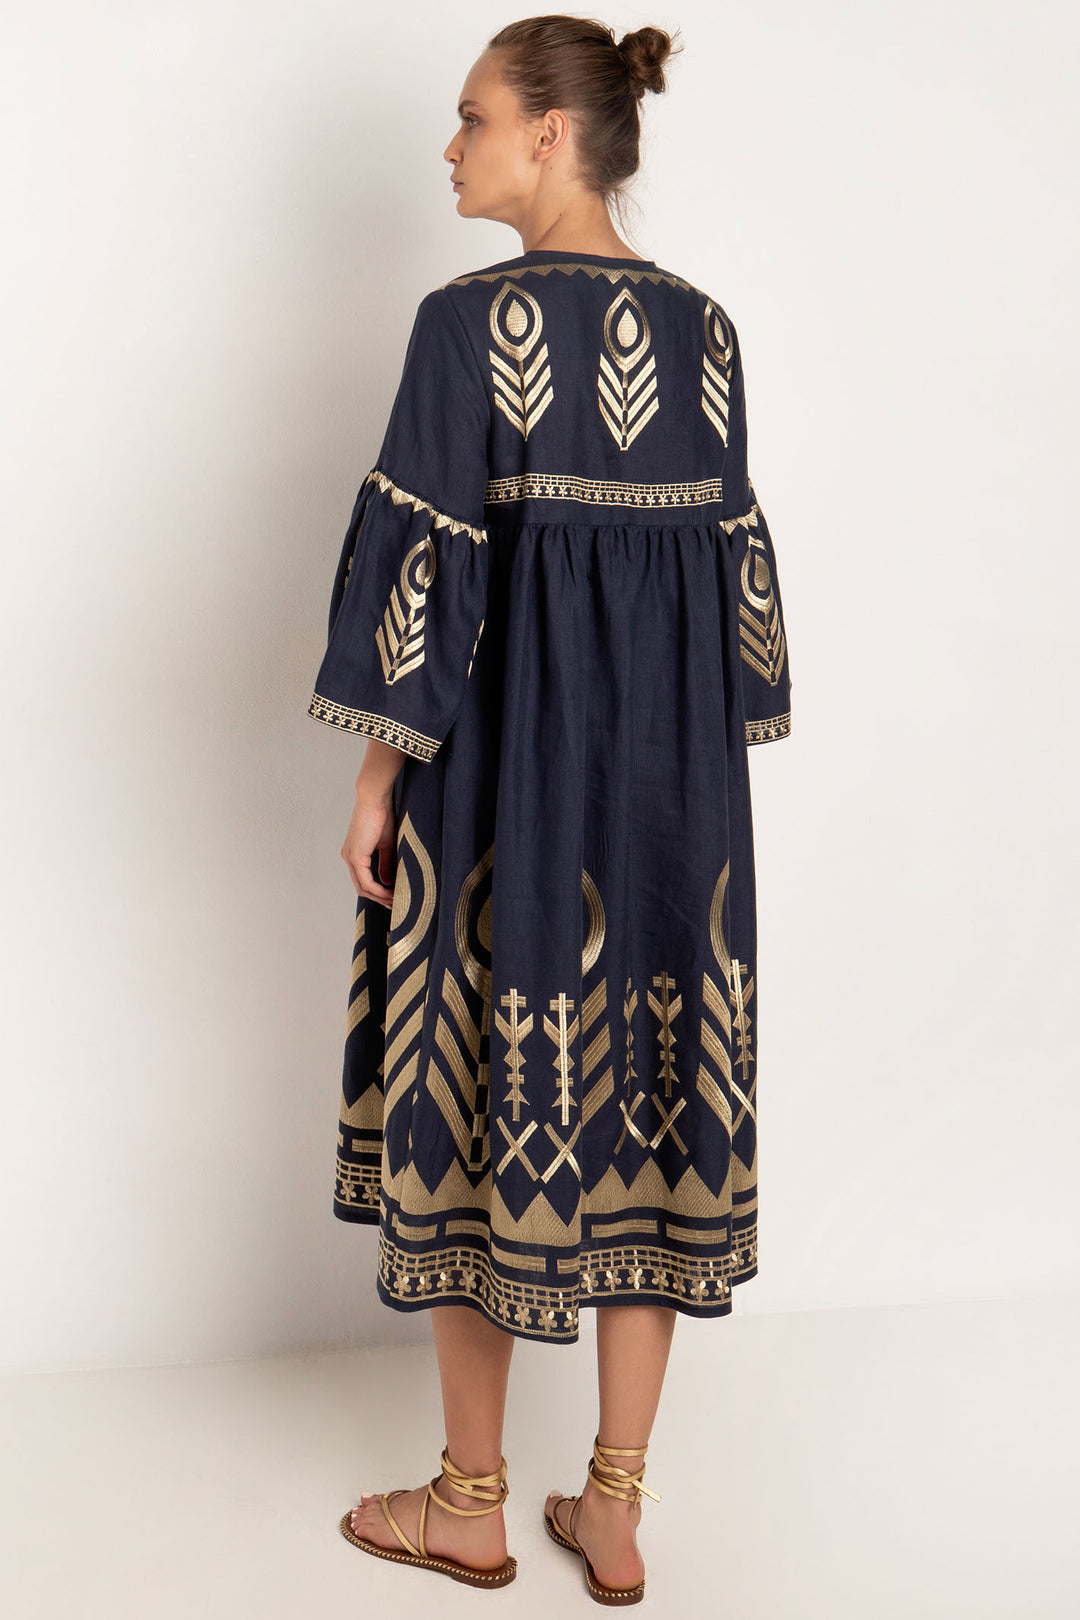 Greek Archaic Kori 230655 Navy Gold Feather Bell Sleeve Dress - Olivia Grace Fashion